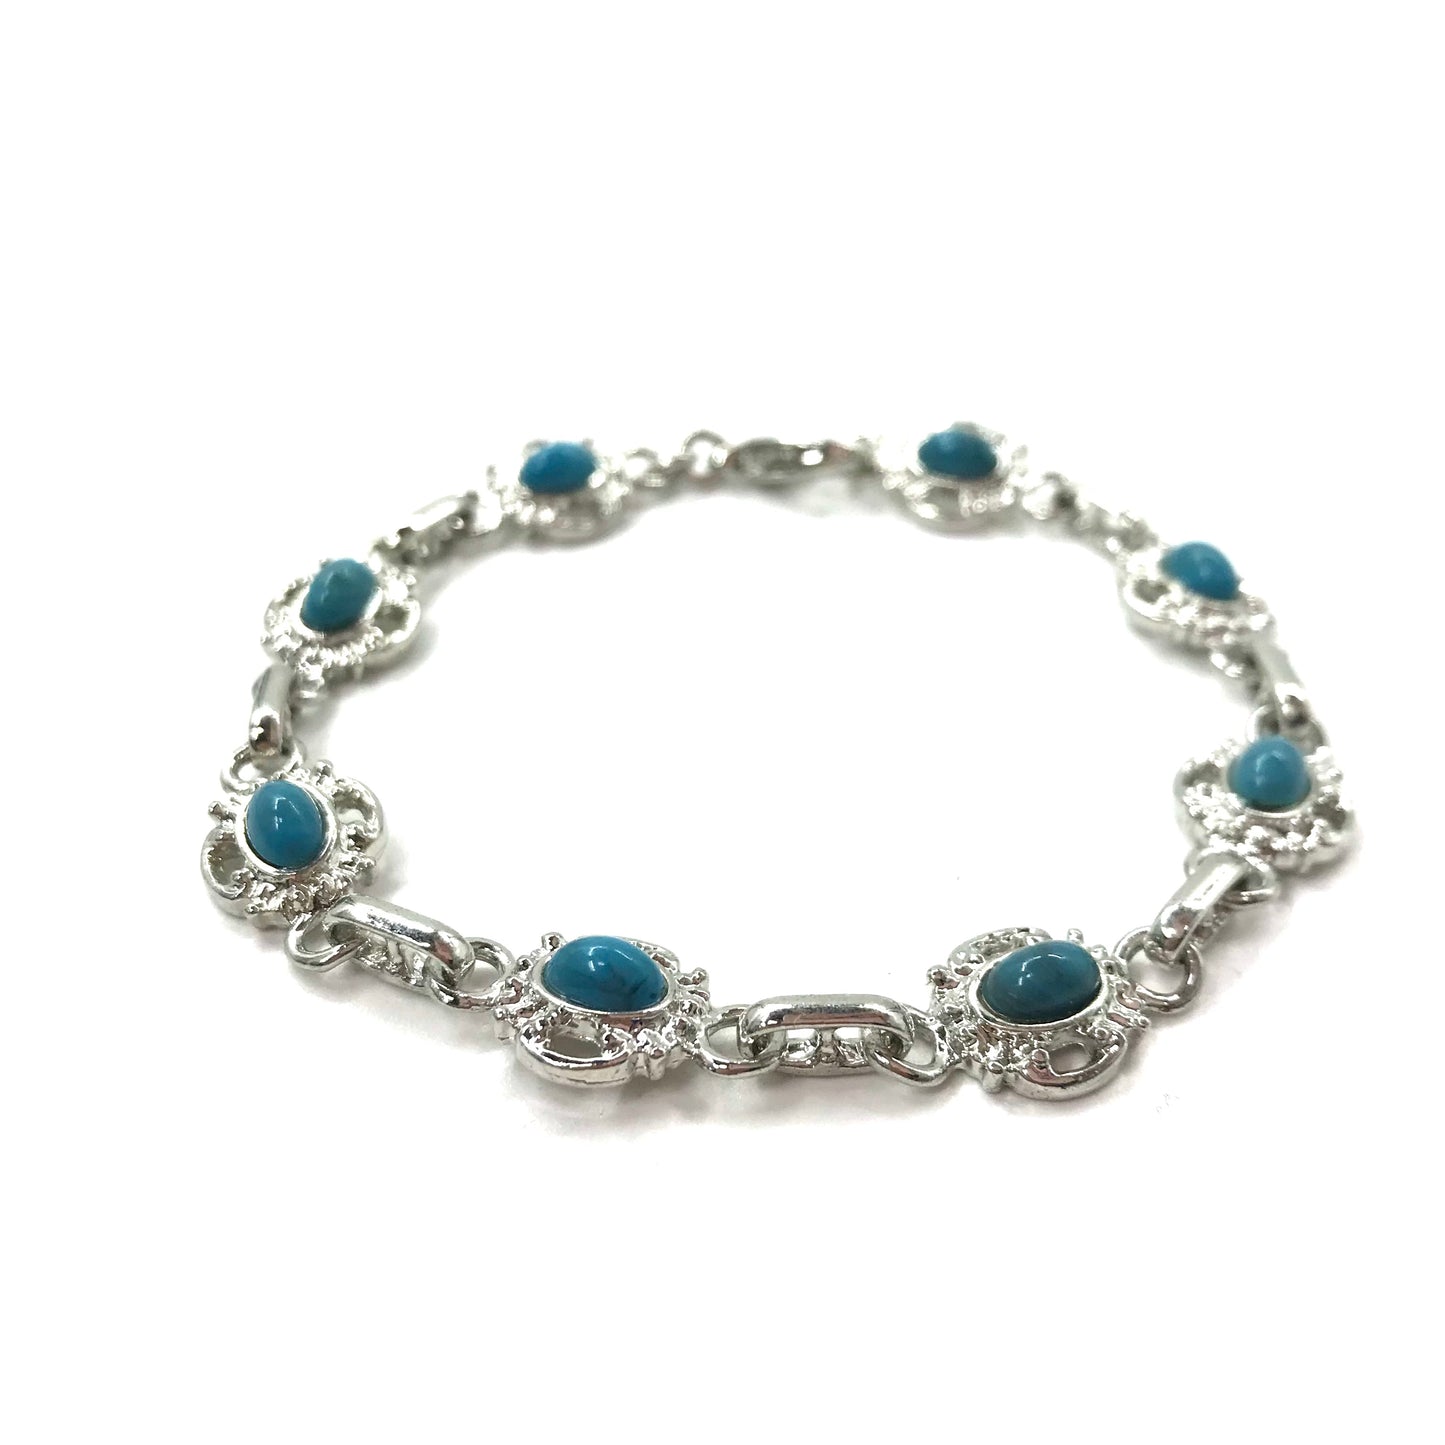 Vintage Turquoise Bracelet ヴィンテージ ターコイズ ブレスレット 19cm ブルー 天然石 トルコ石